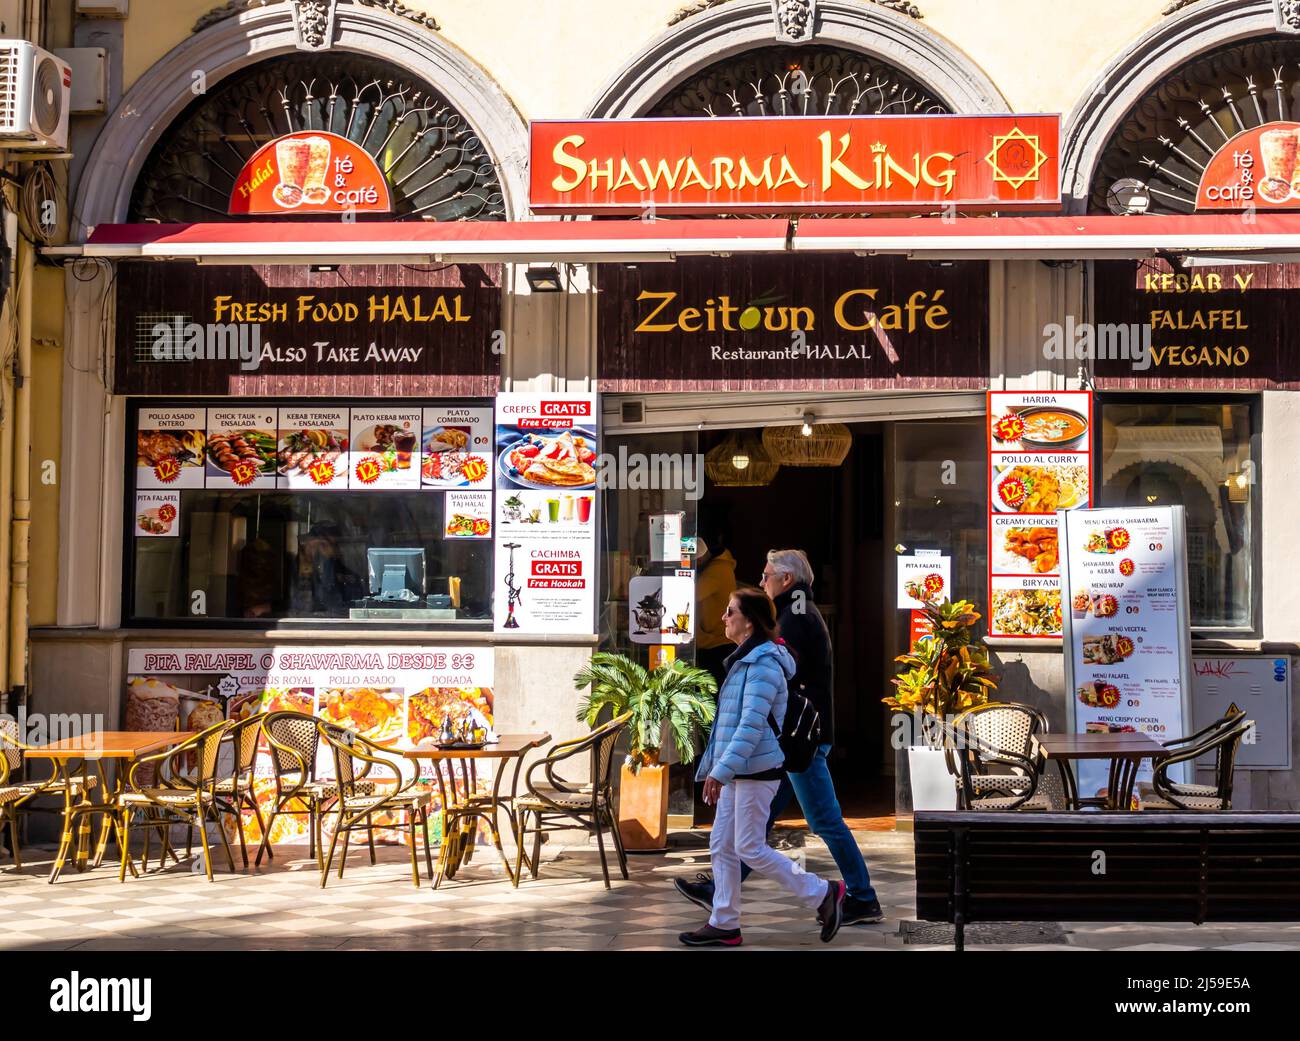 Shawarma King restaurant in central Granada, reyes Catolicos. Andalucia, Spain, Europe. Halal food, falafel, fresh food halal Stock Photo